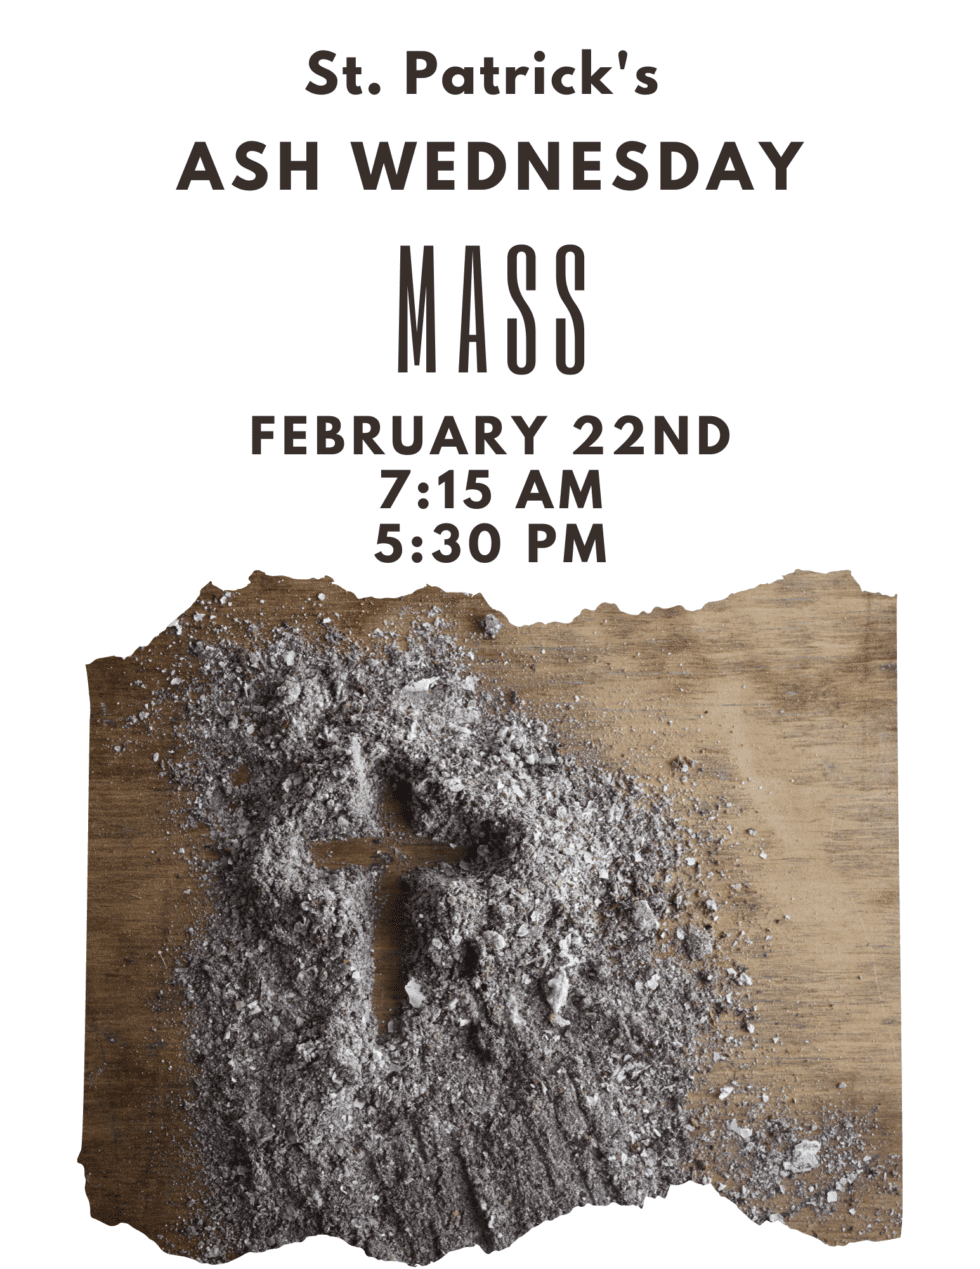 Ash Wednesday Mass Schedule St. Patrick Catholic Church